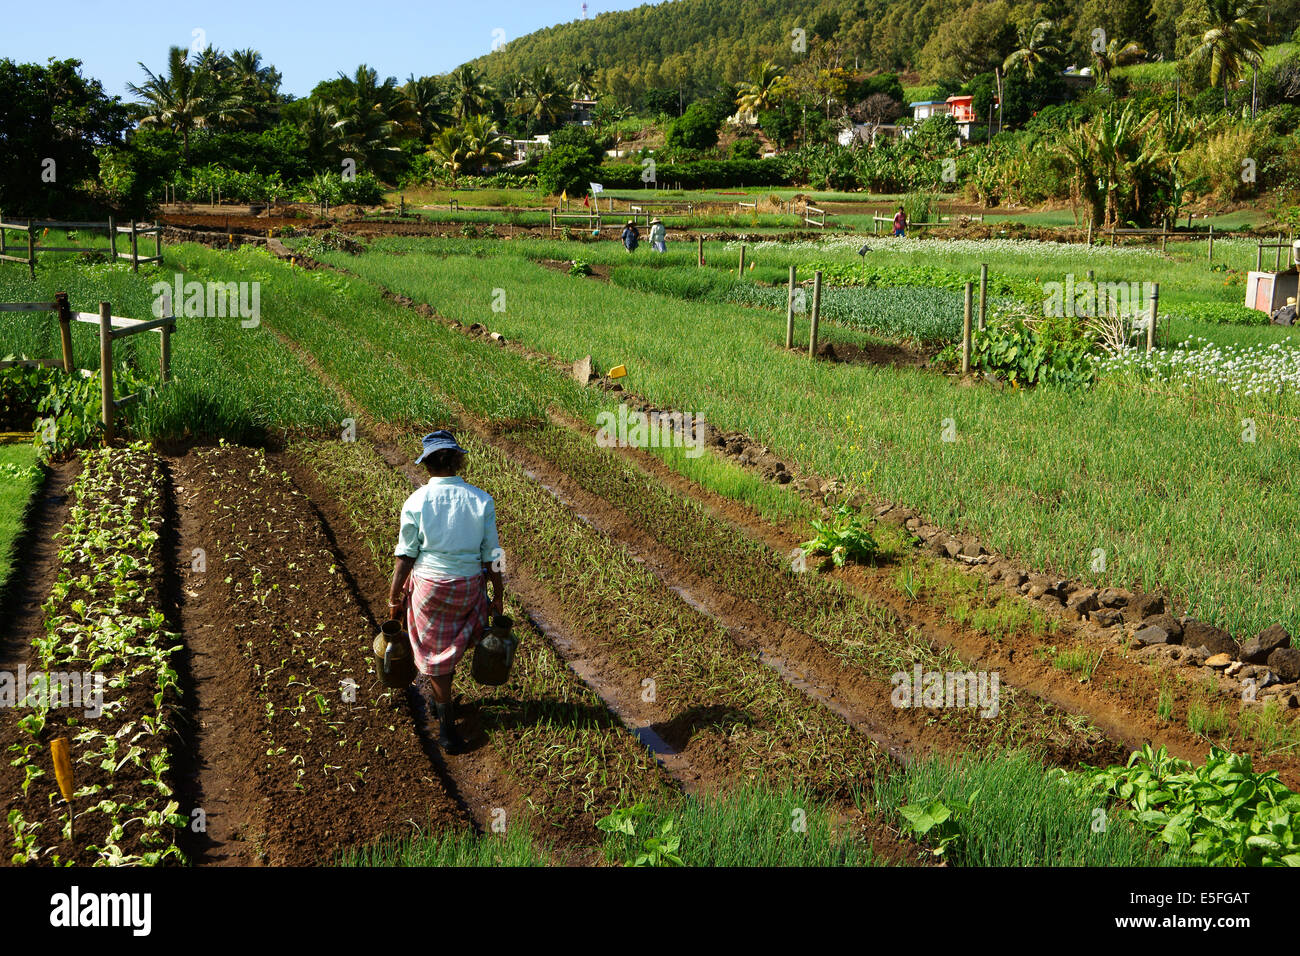 Woman watering onion plants in vegetable garden, east coast Island Mauritius Stock Photo